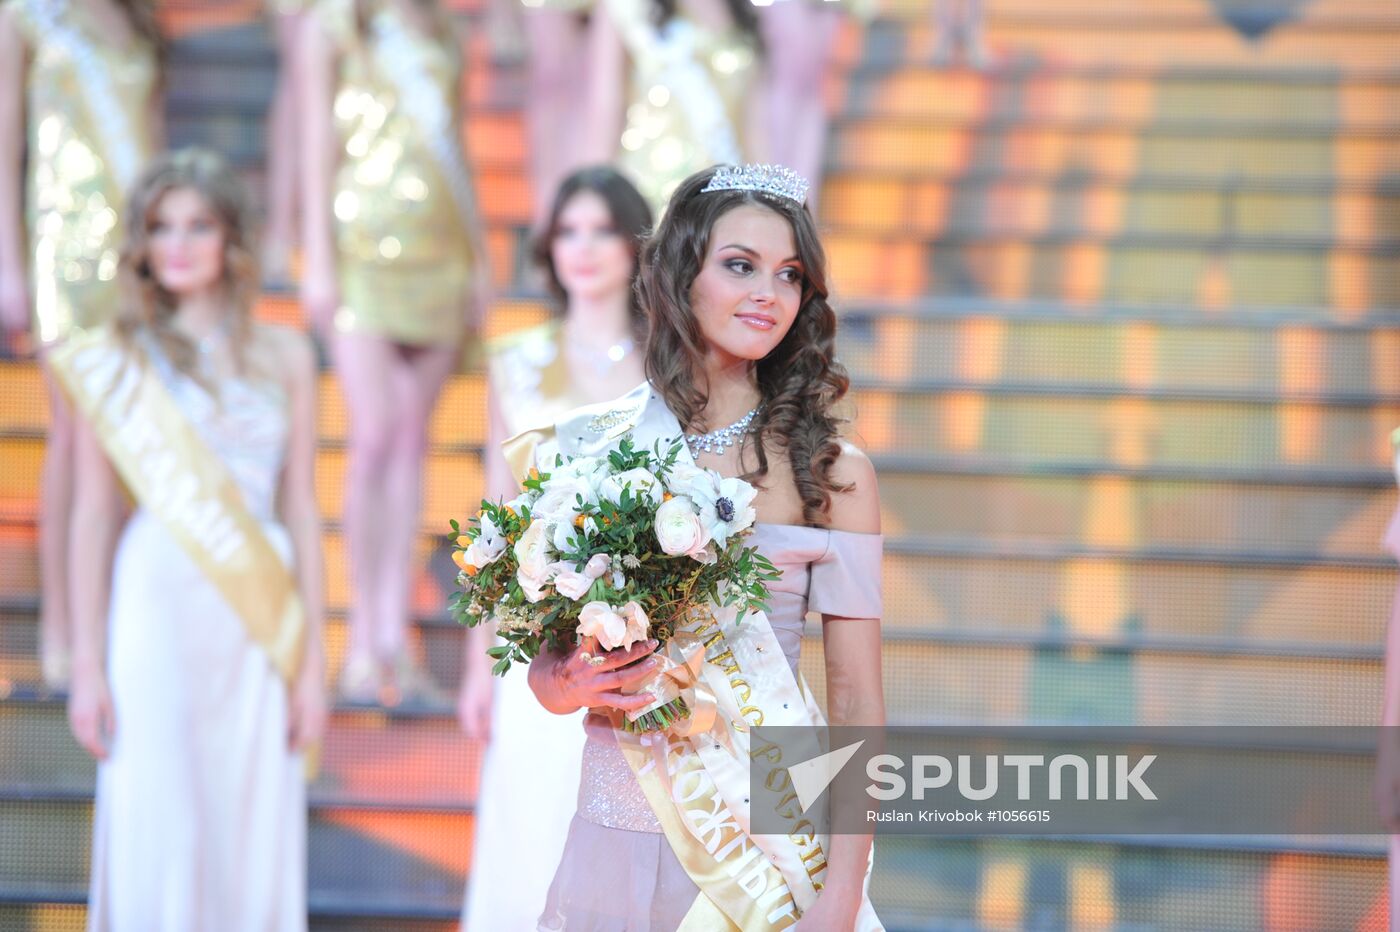 Final Show Of The Miss Russia National Beauty Pageant Sputnik Mediabank